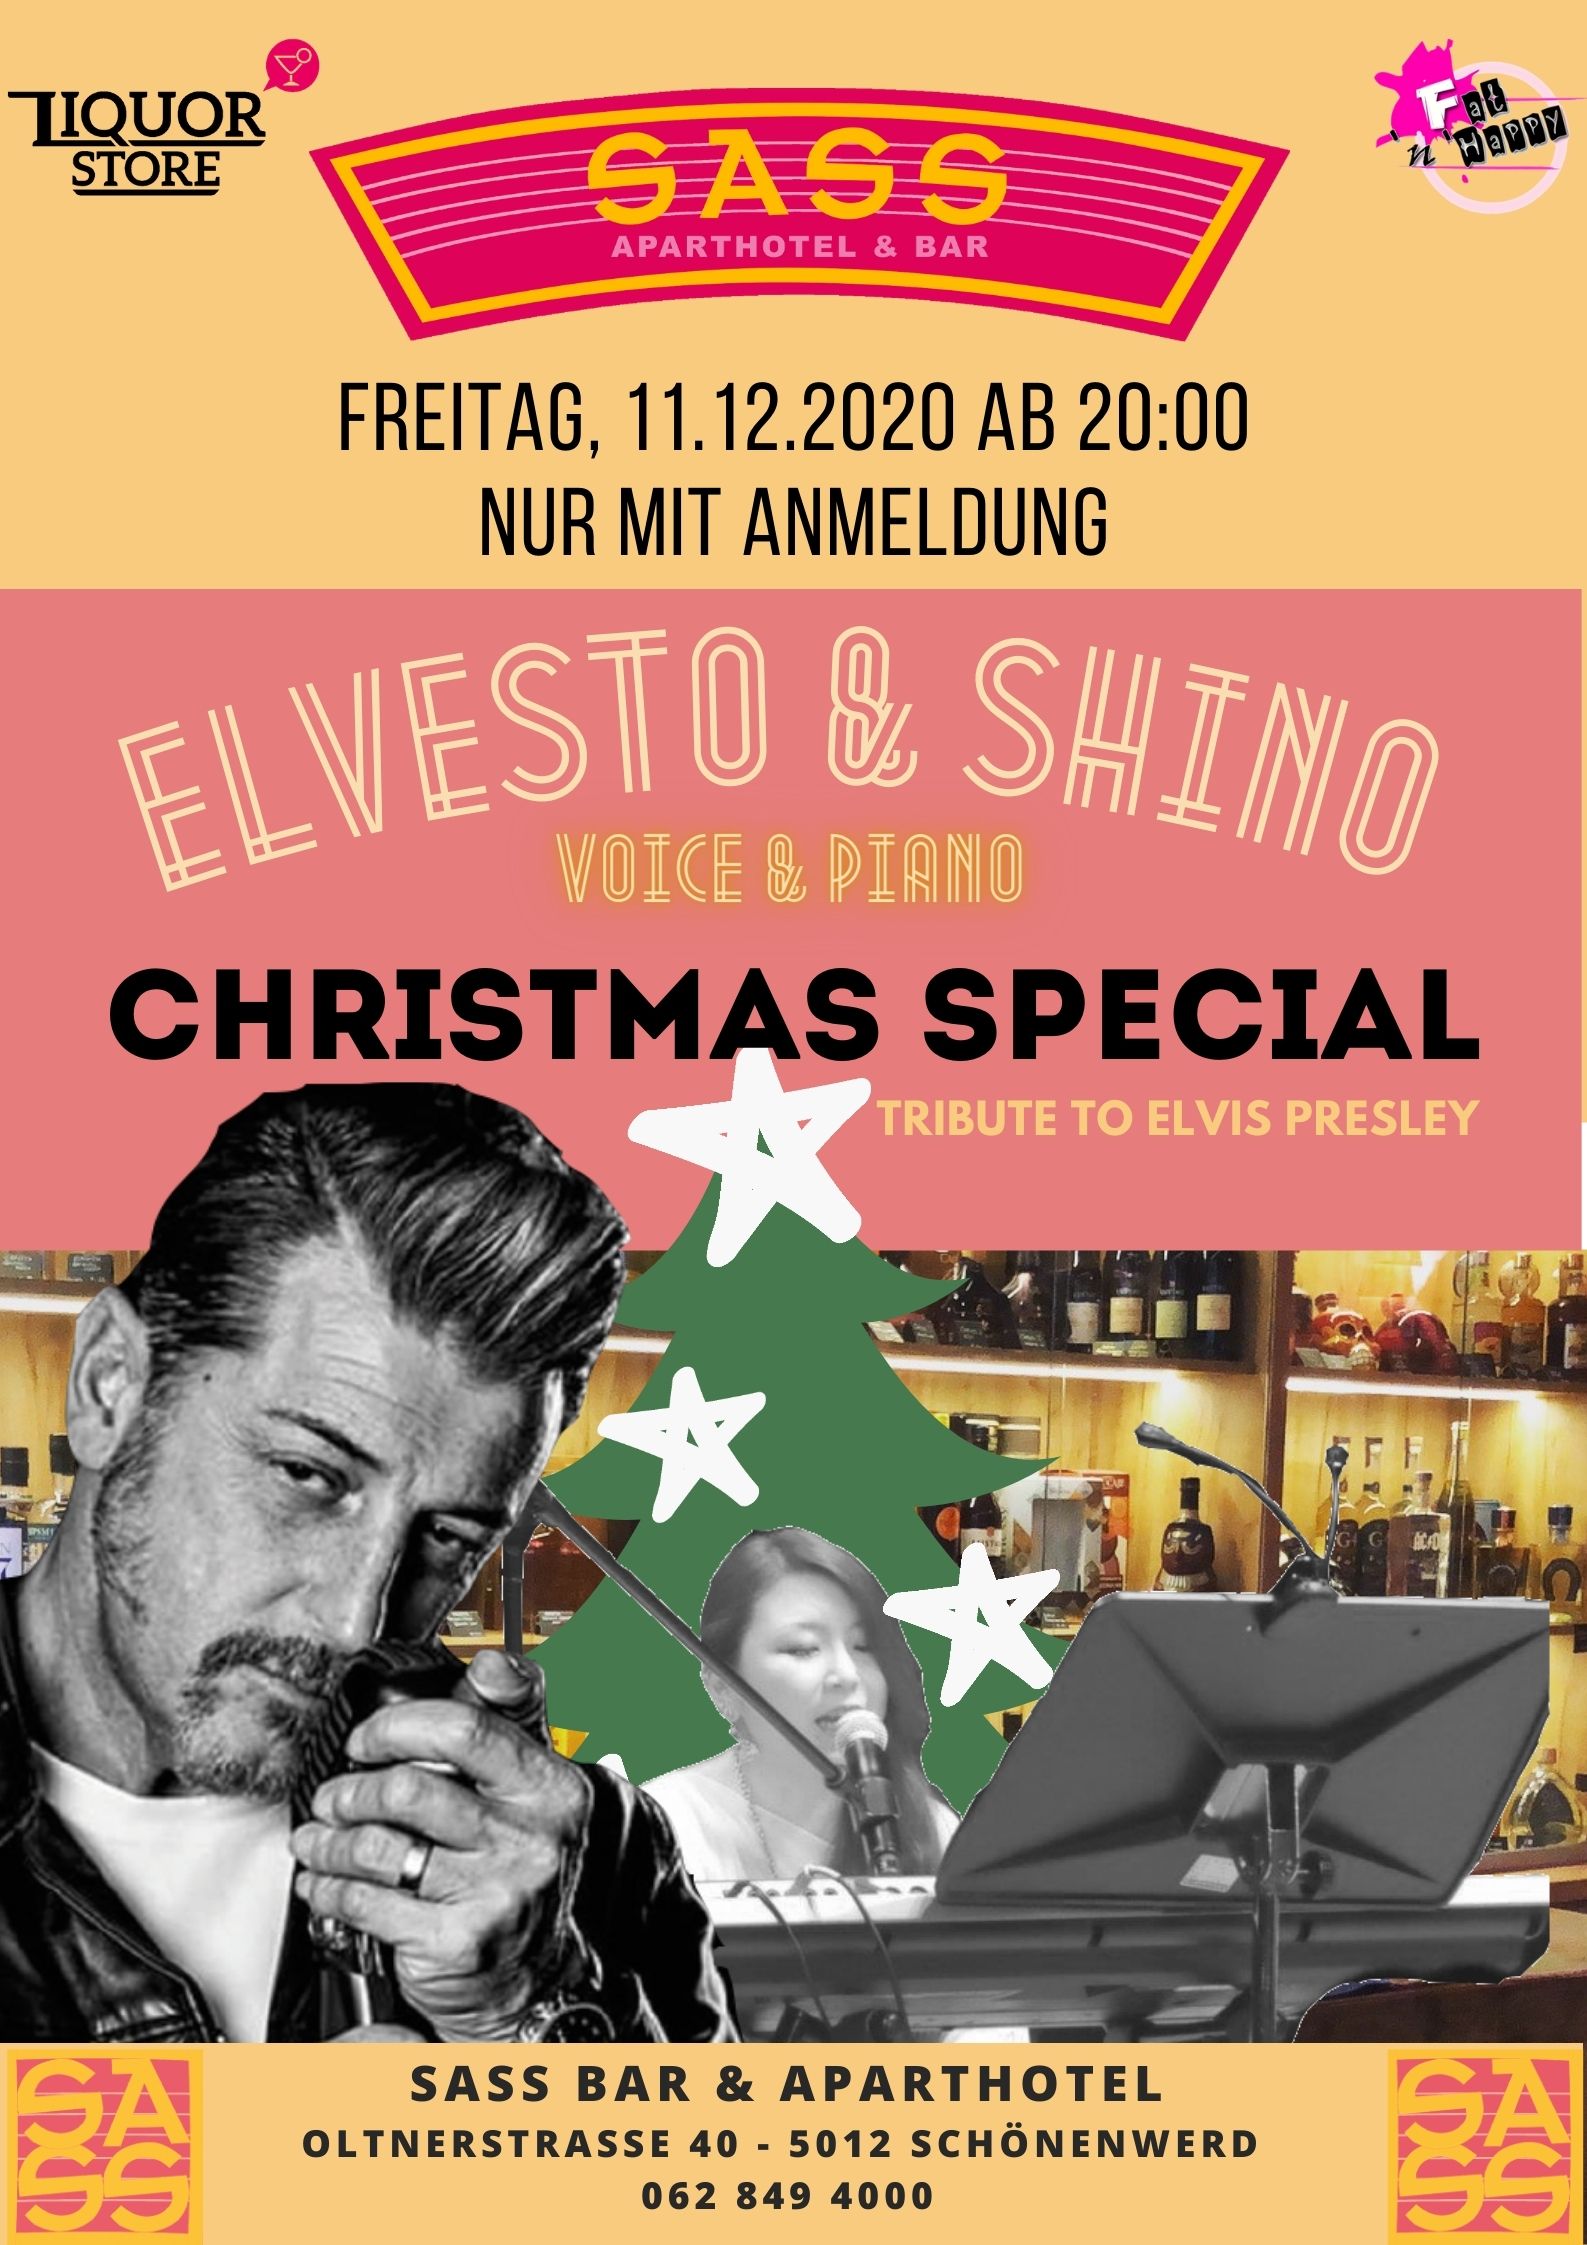 Christmas Special mit Elvesto and Shino